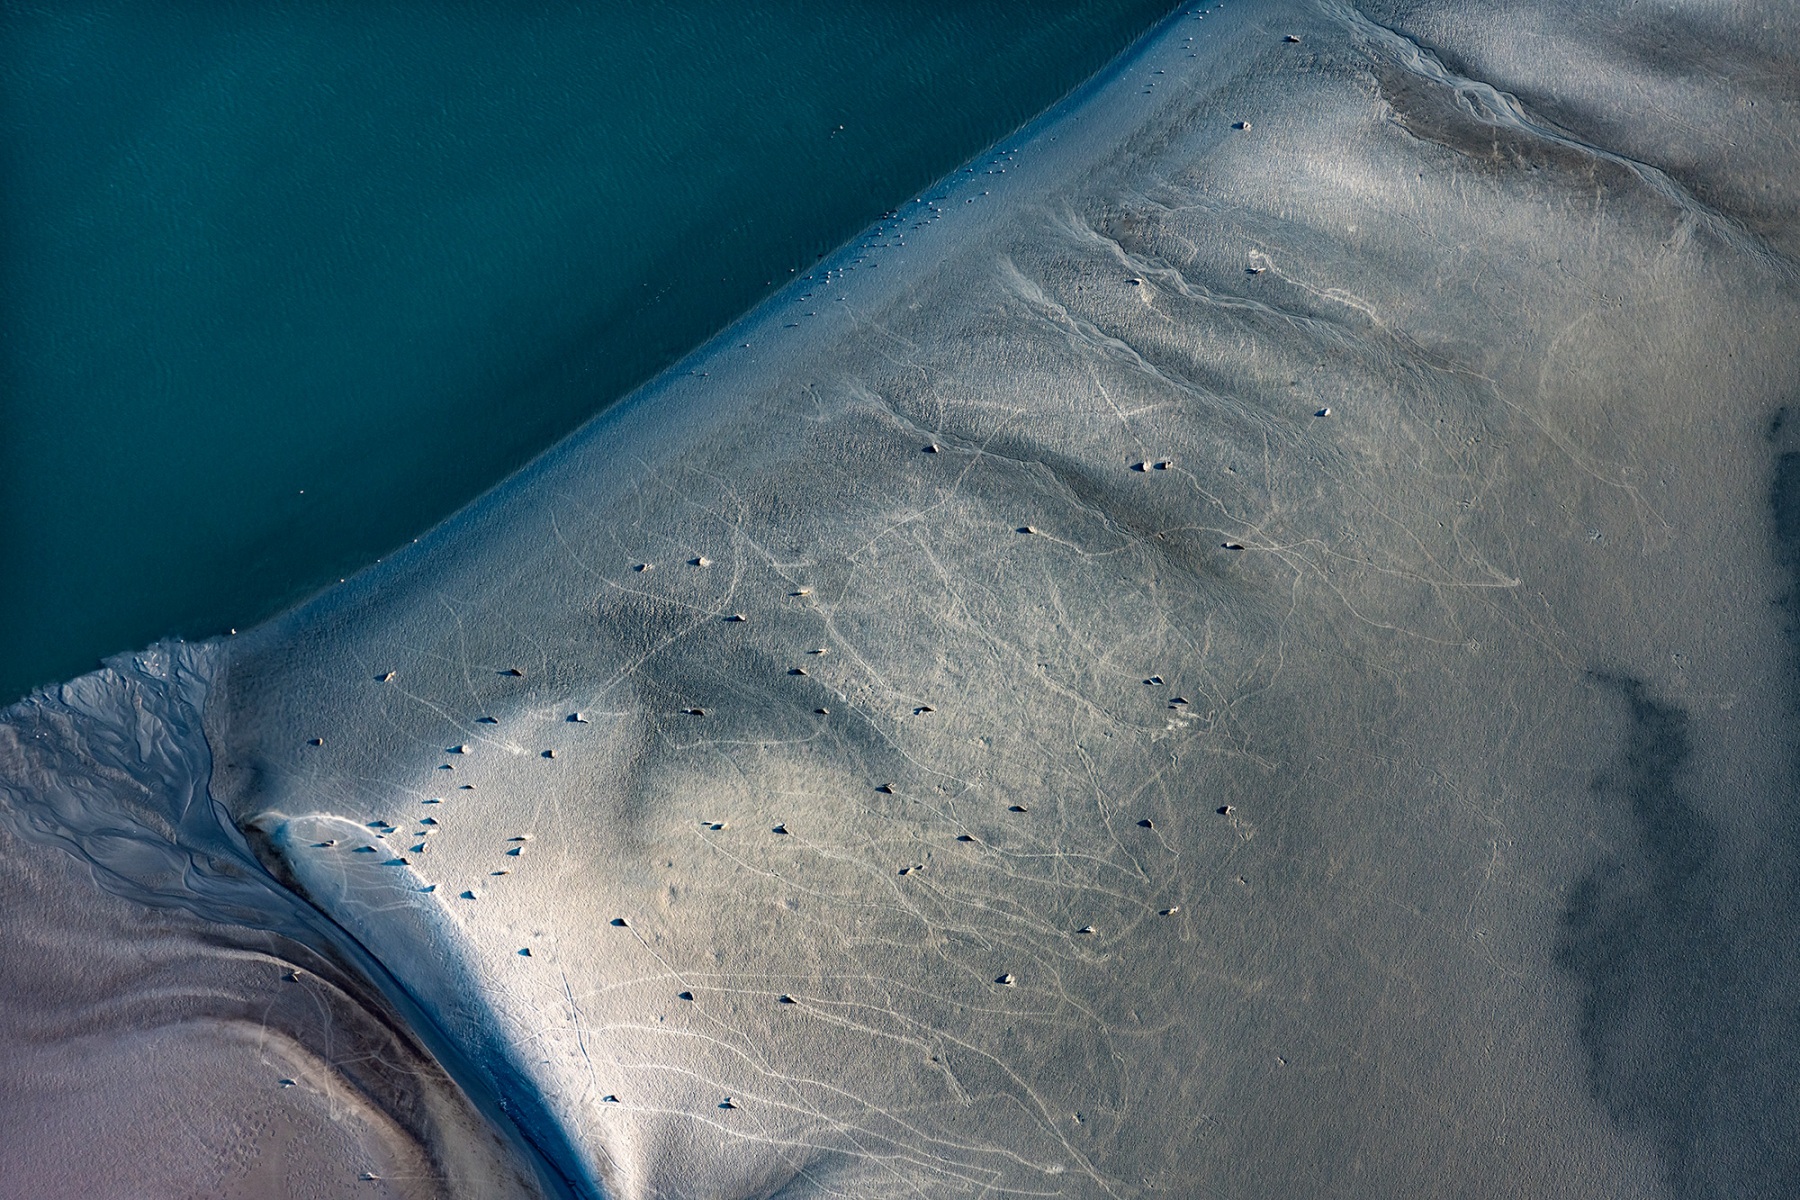 A sandbank in the mudflats is a favorite spot for seals. © Martin Elsen